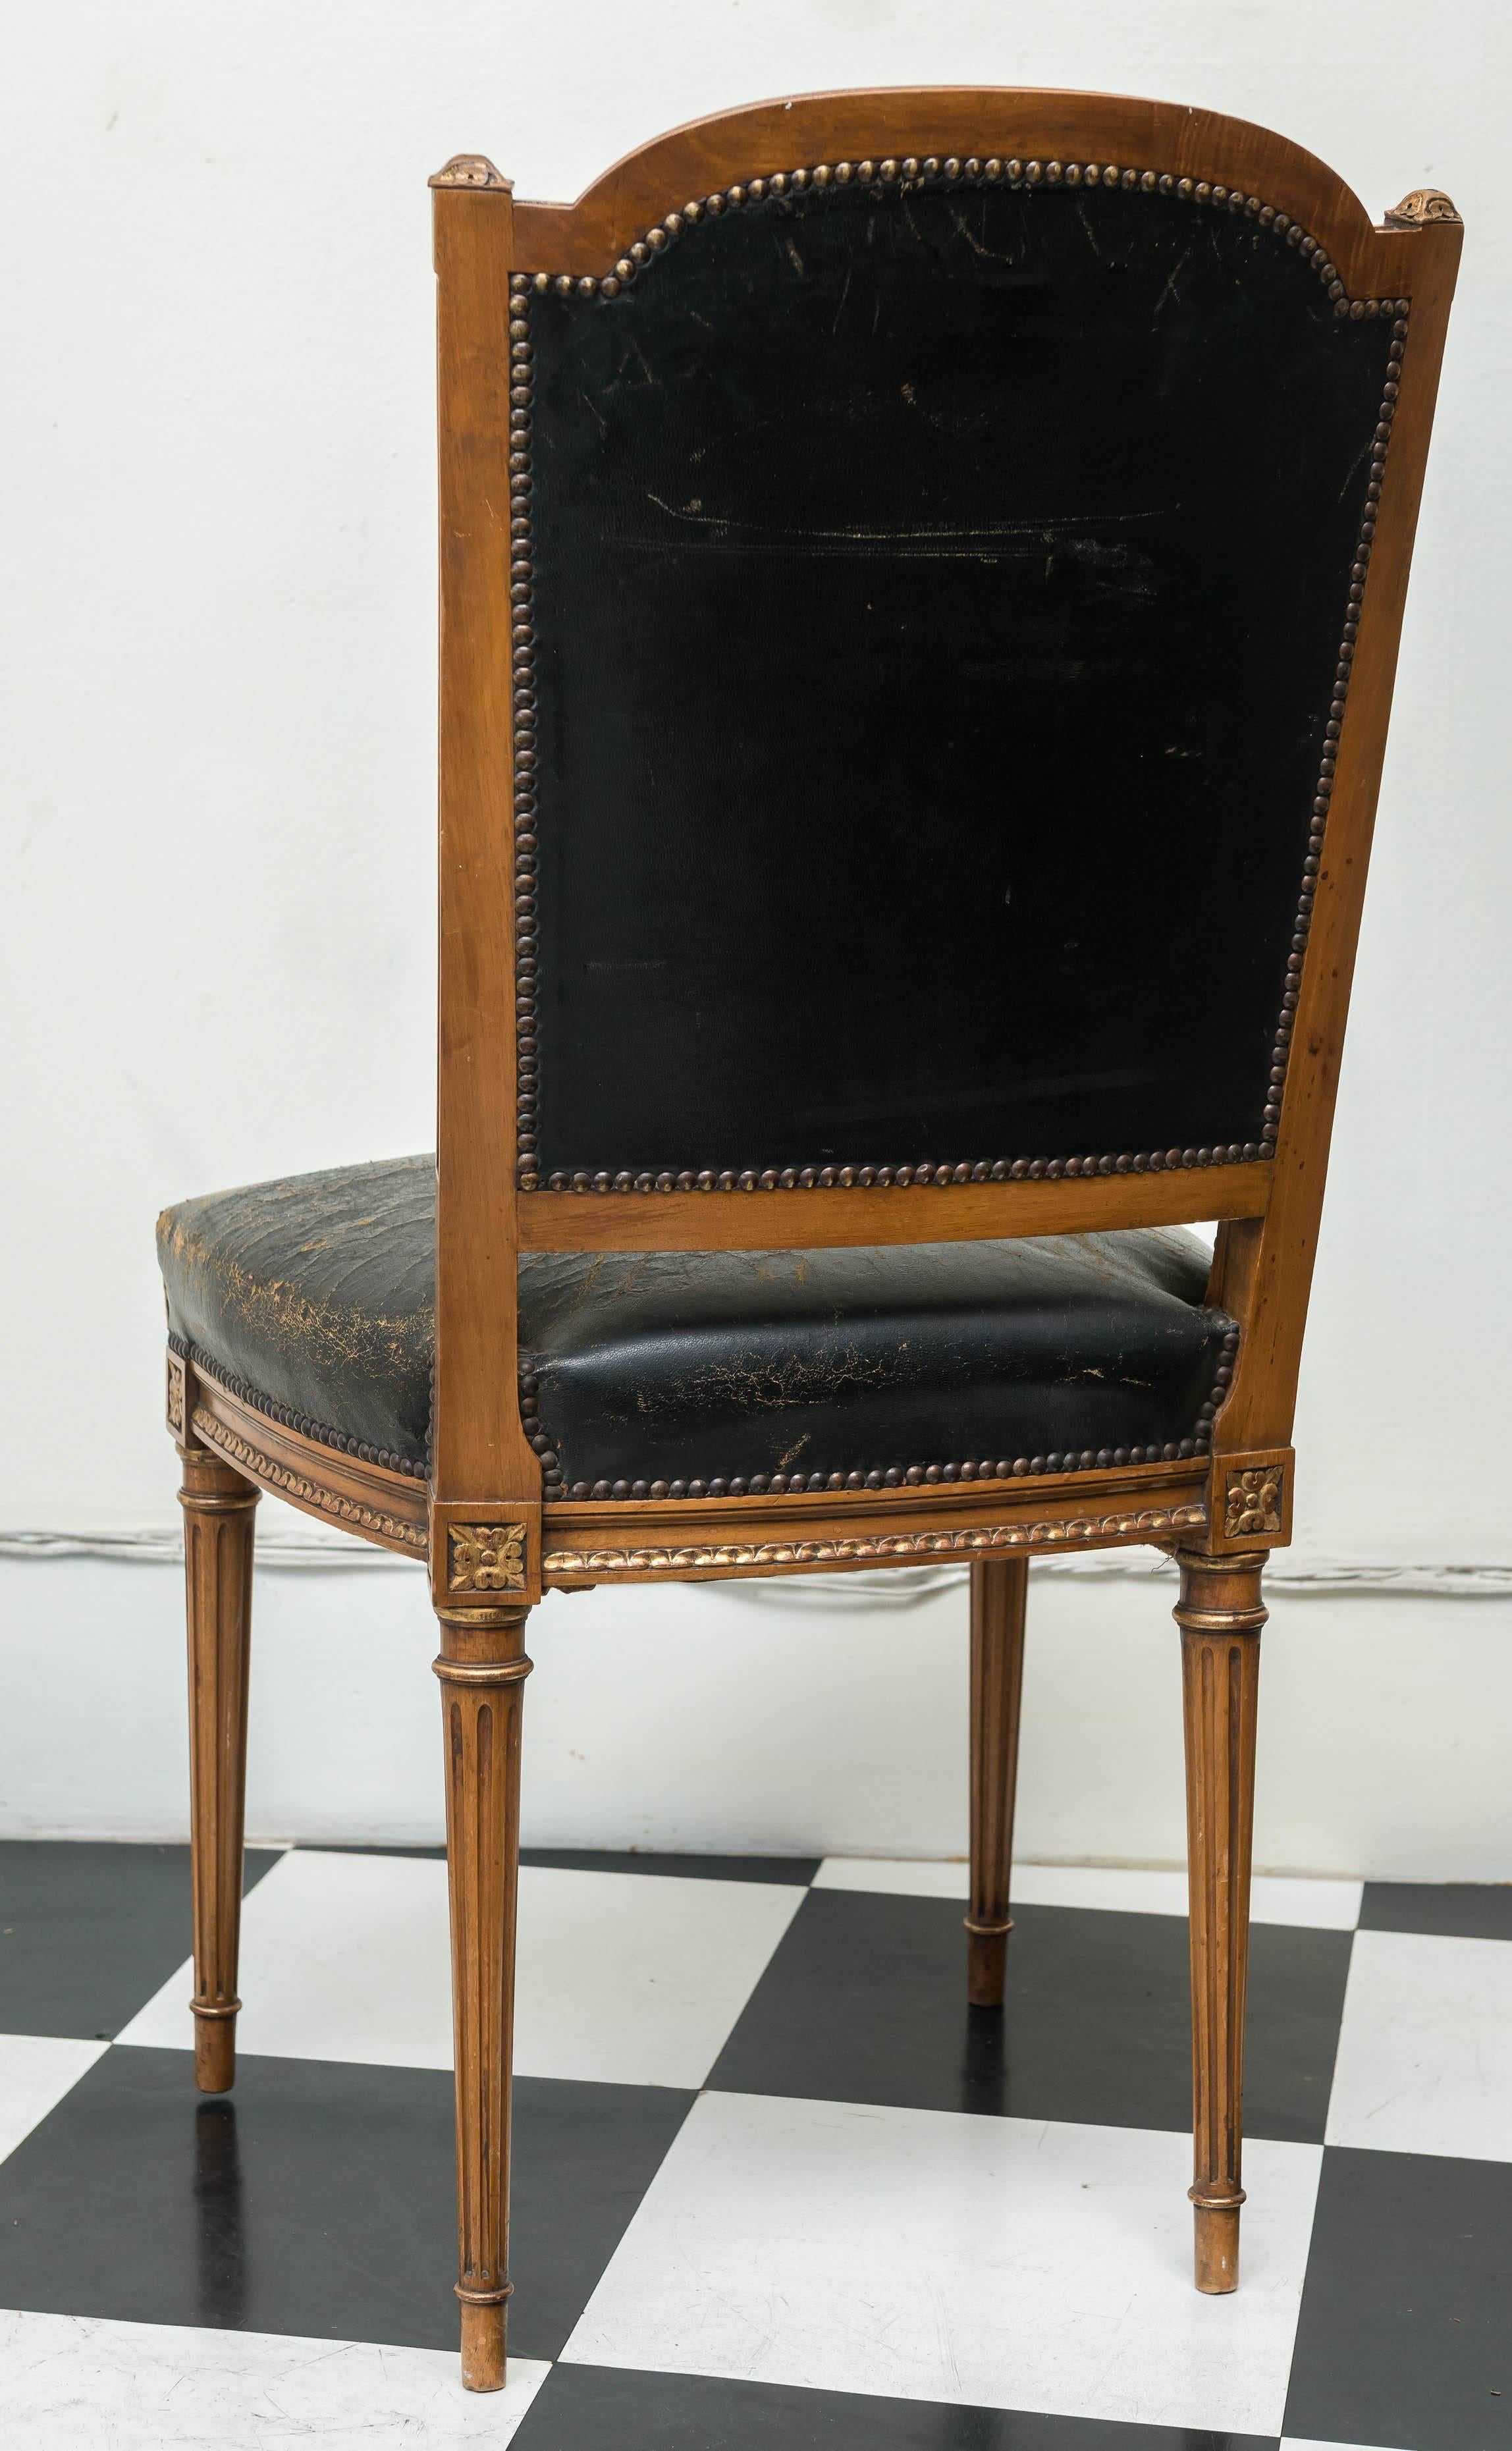 Giltwood Louis XVI Revival Style Chair by Simon Loscertales Bona, Zaragosa, Spain